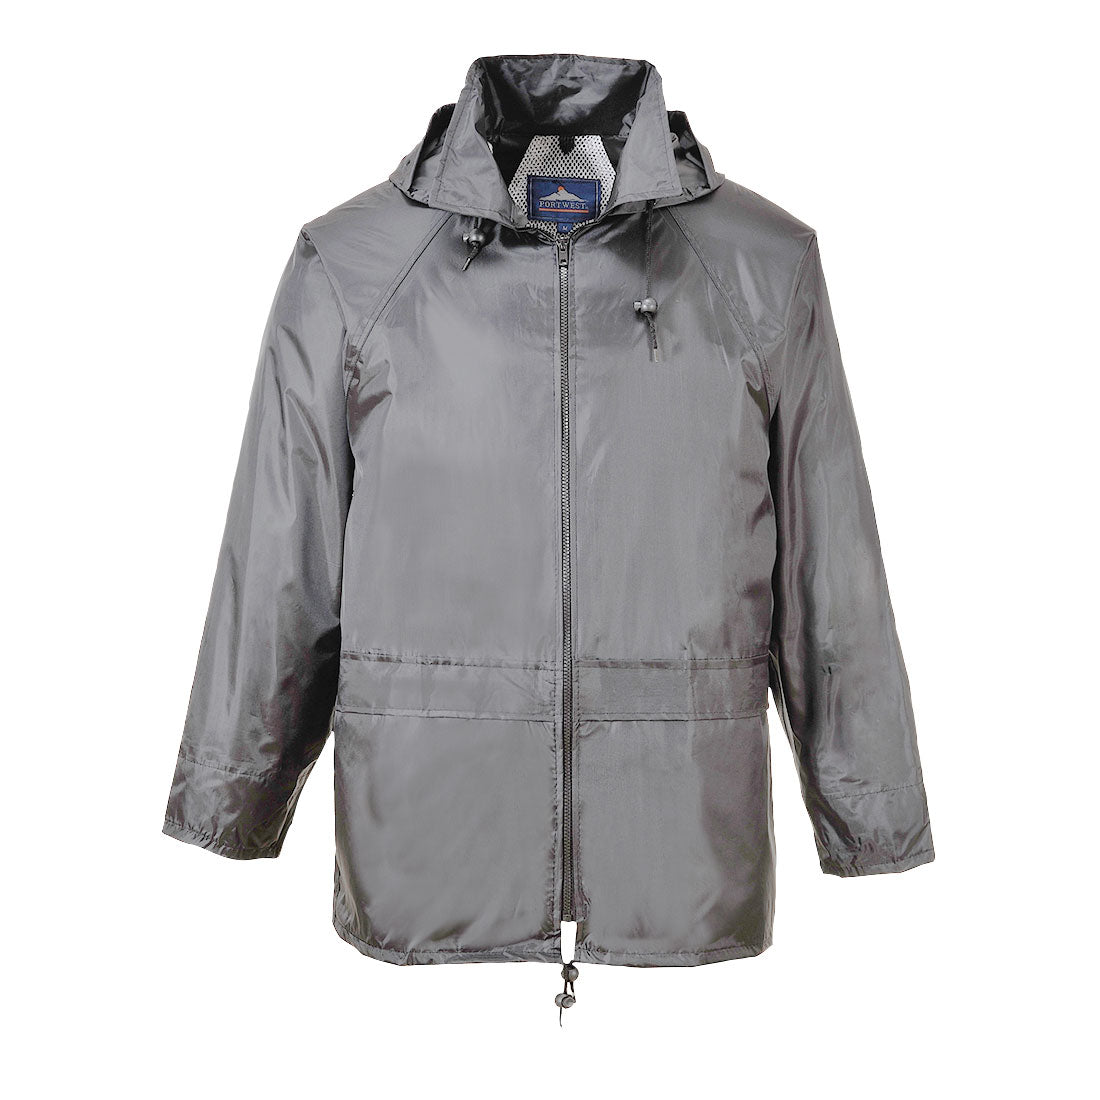 Portwest S440 Grey Sz M Classic Rain Jacket Coat Waterproof Hooded Zipped